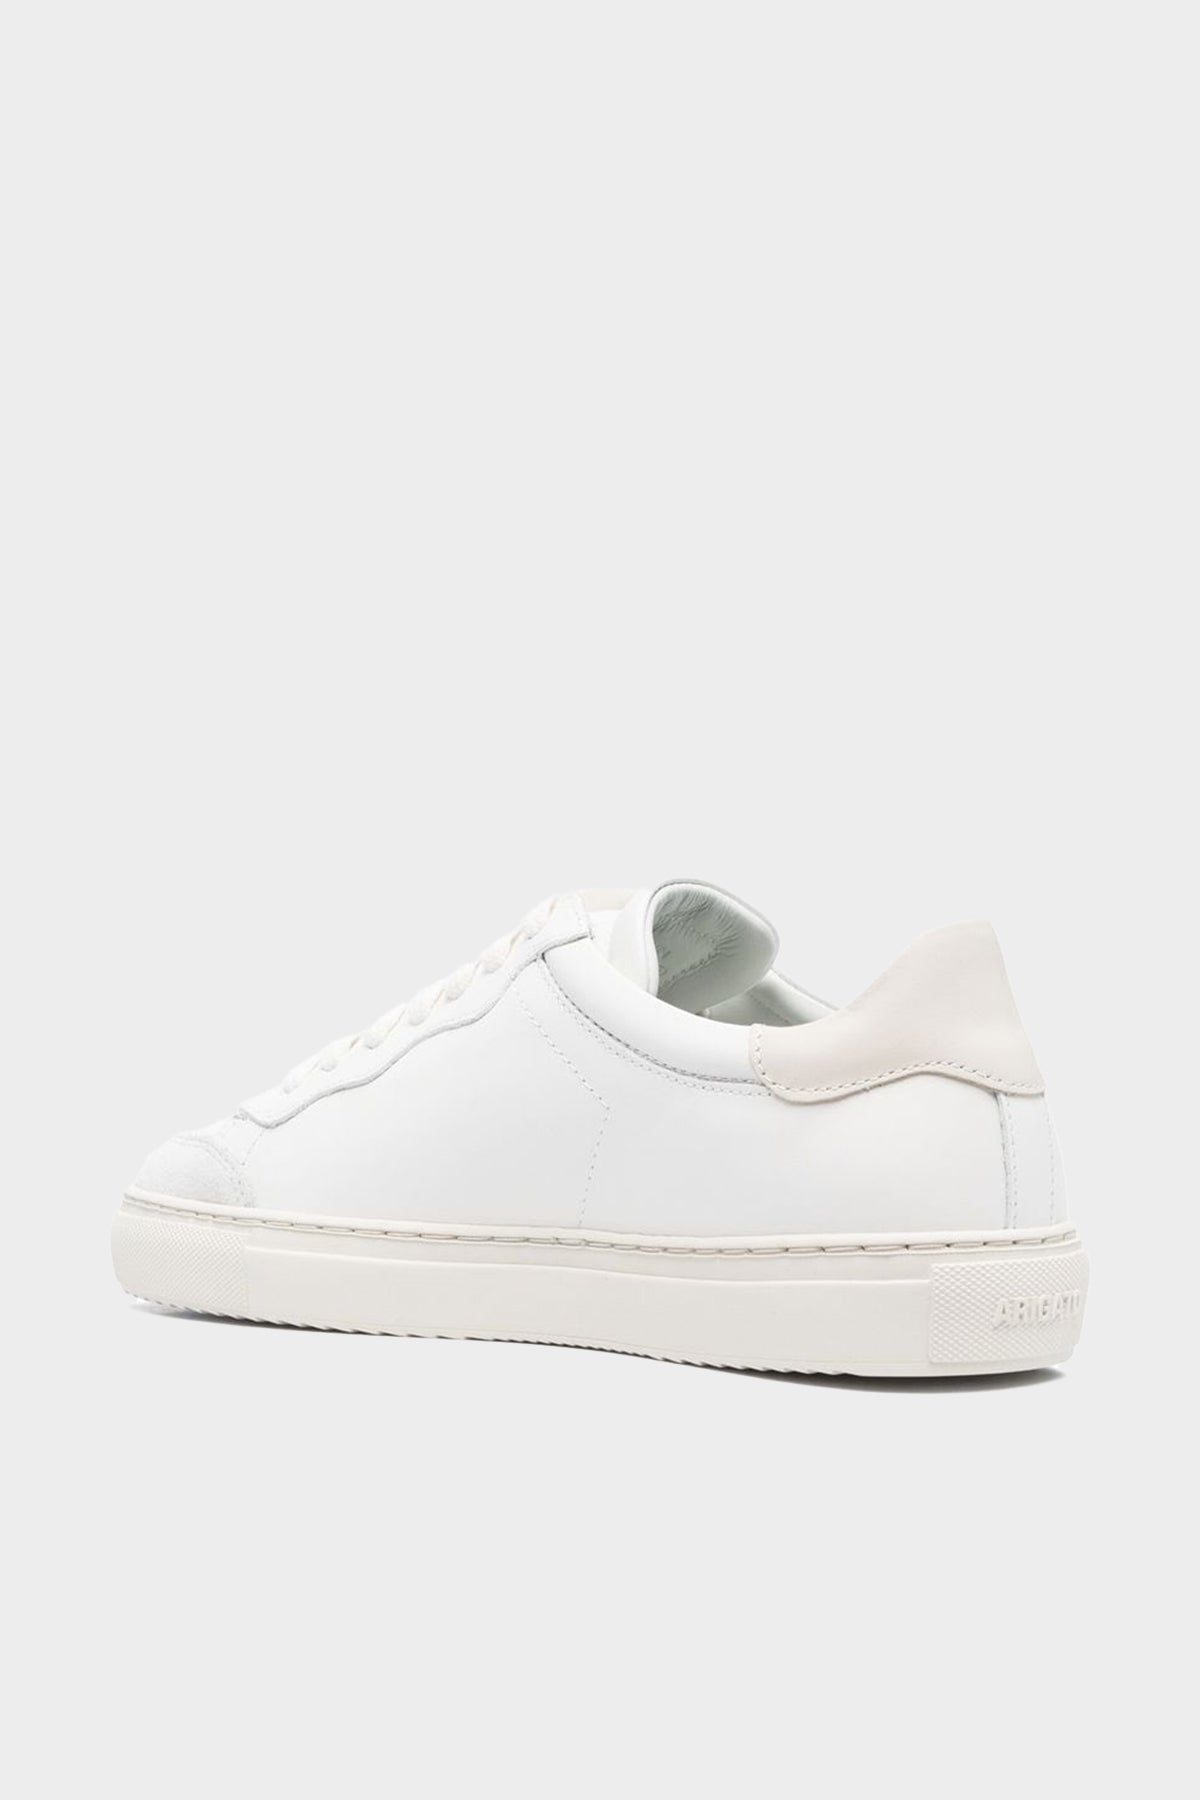 Clean 180 Sneaker in White Cremino - shop-olivia.com